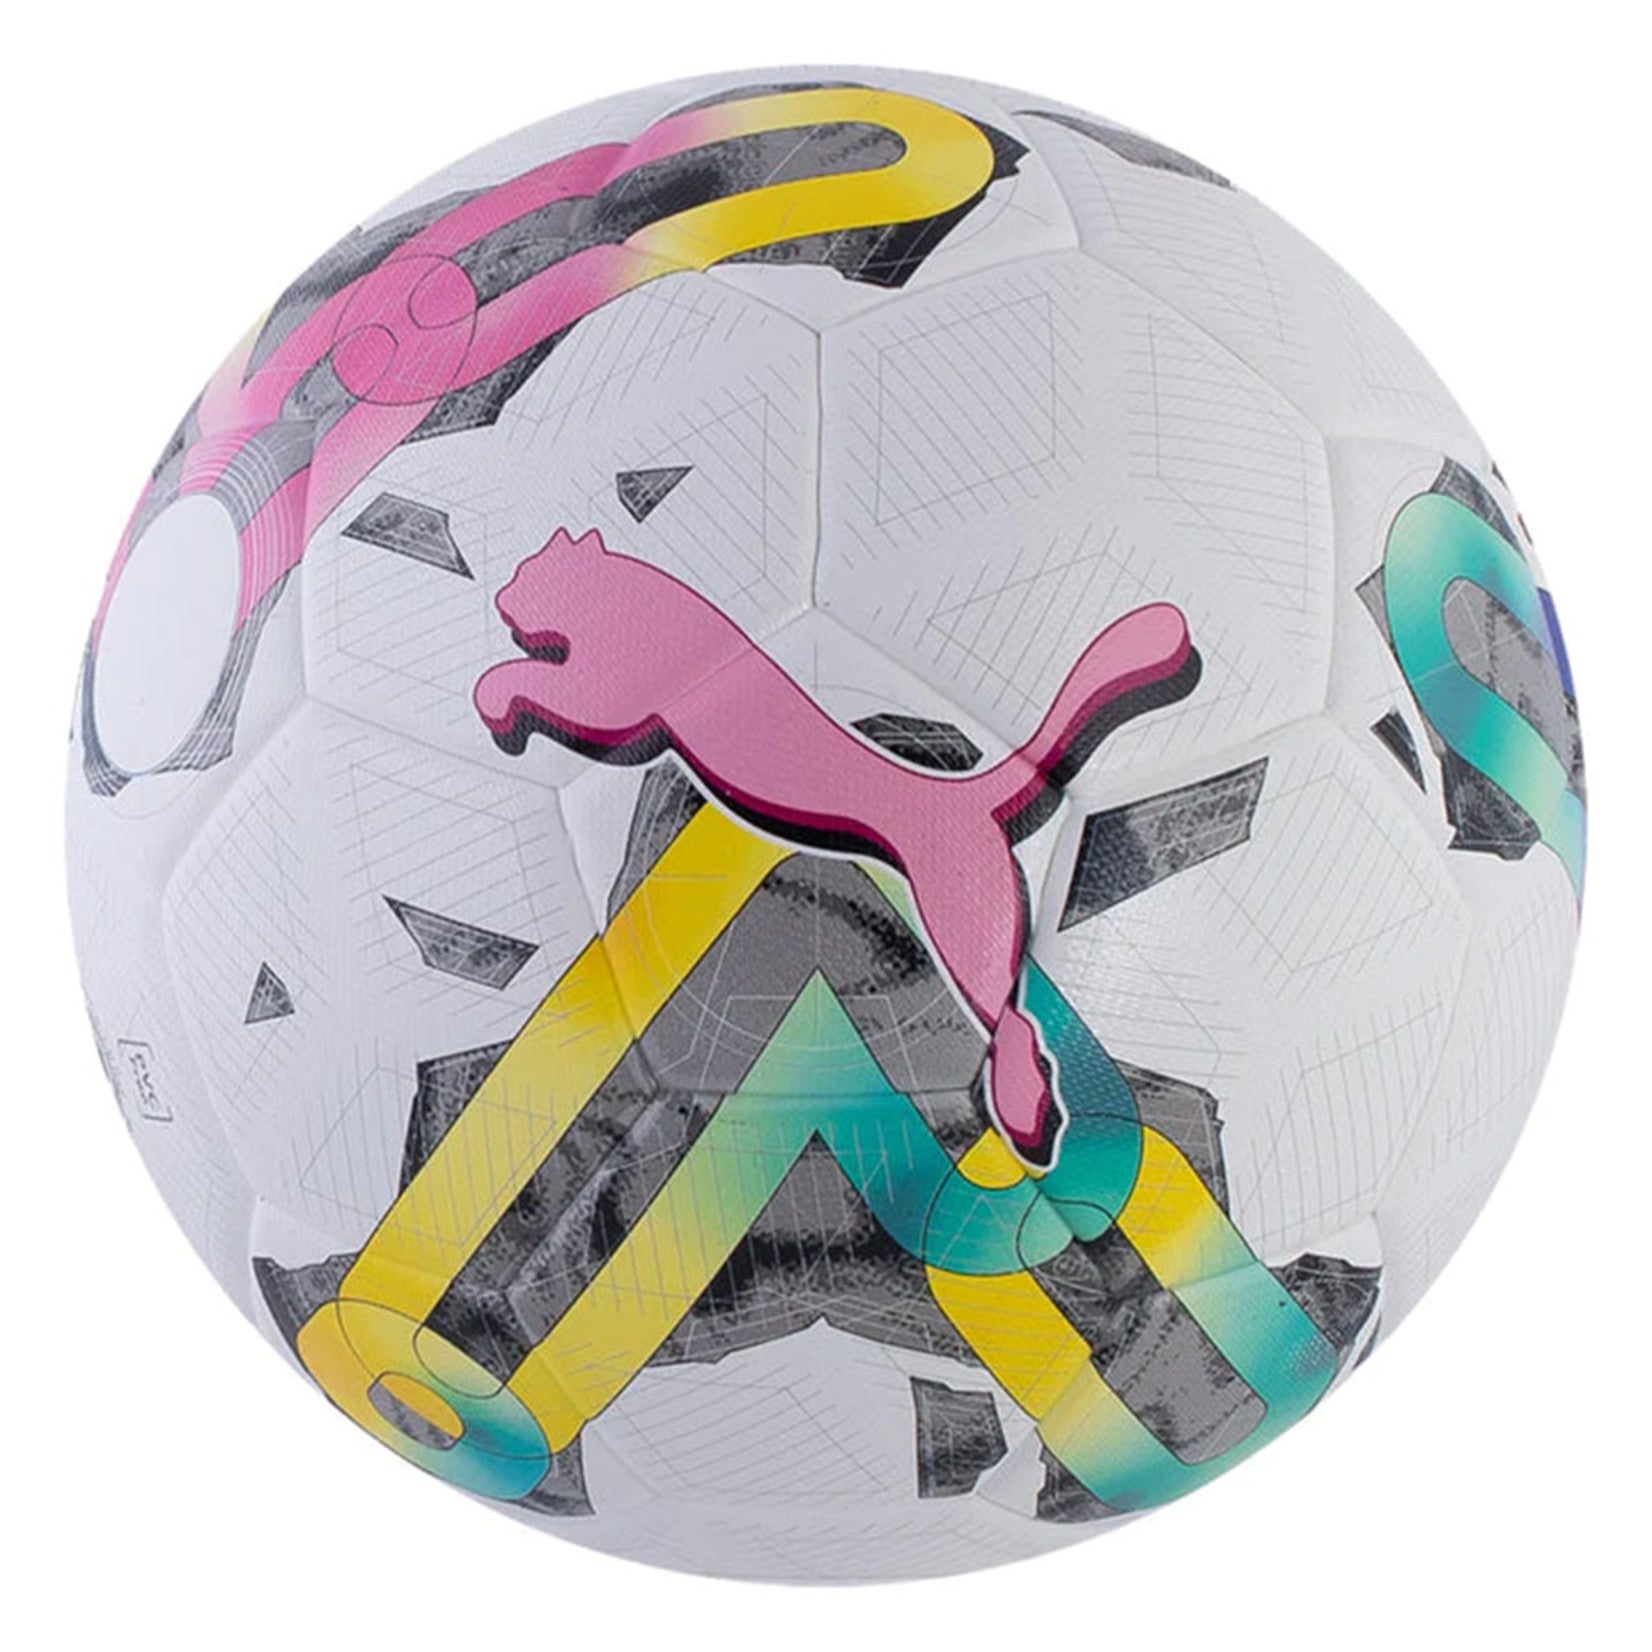 Puma Orbita 3 FIFA Quality NFHS Soccer Ball - White